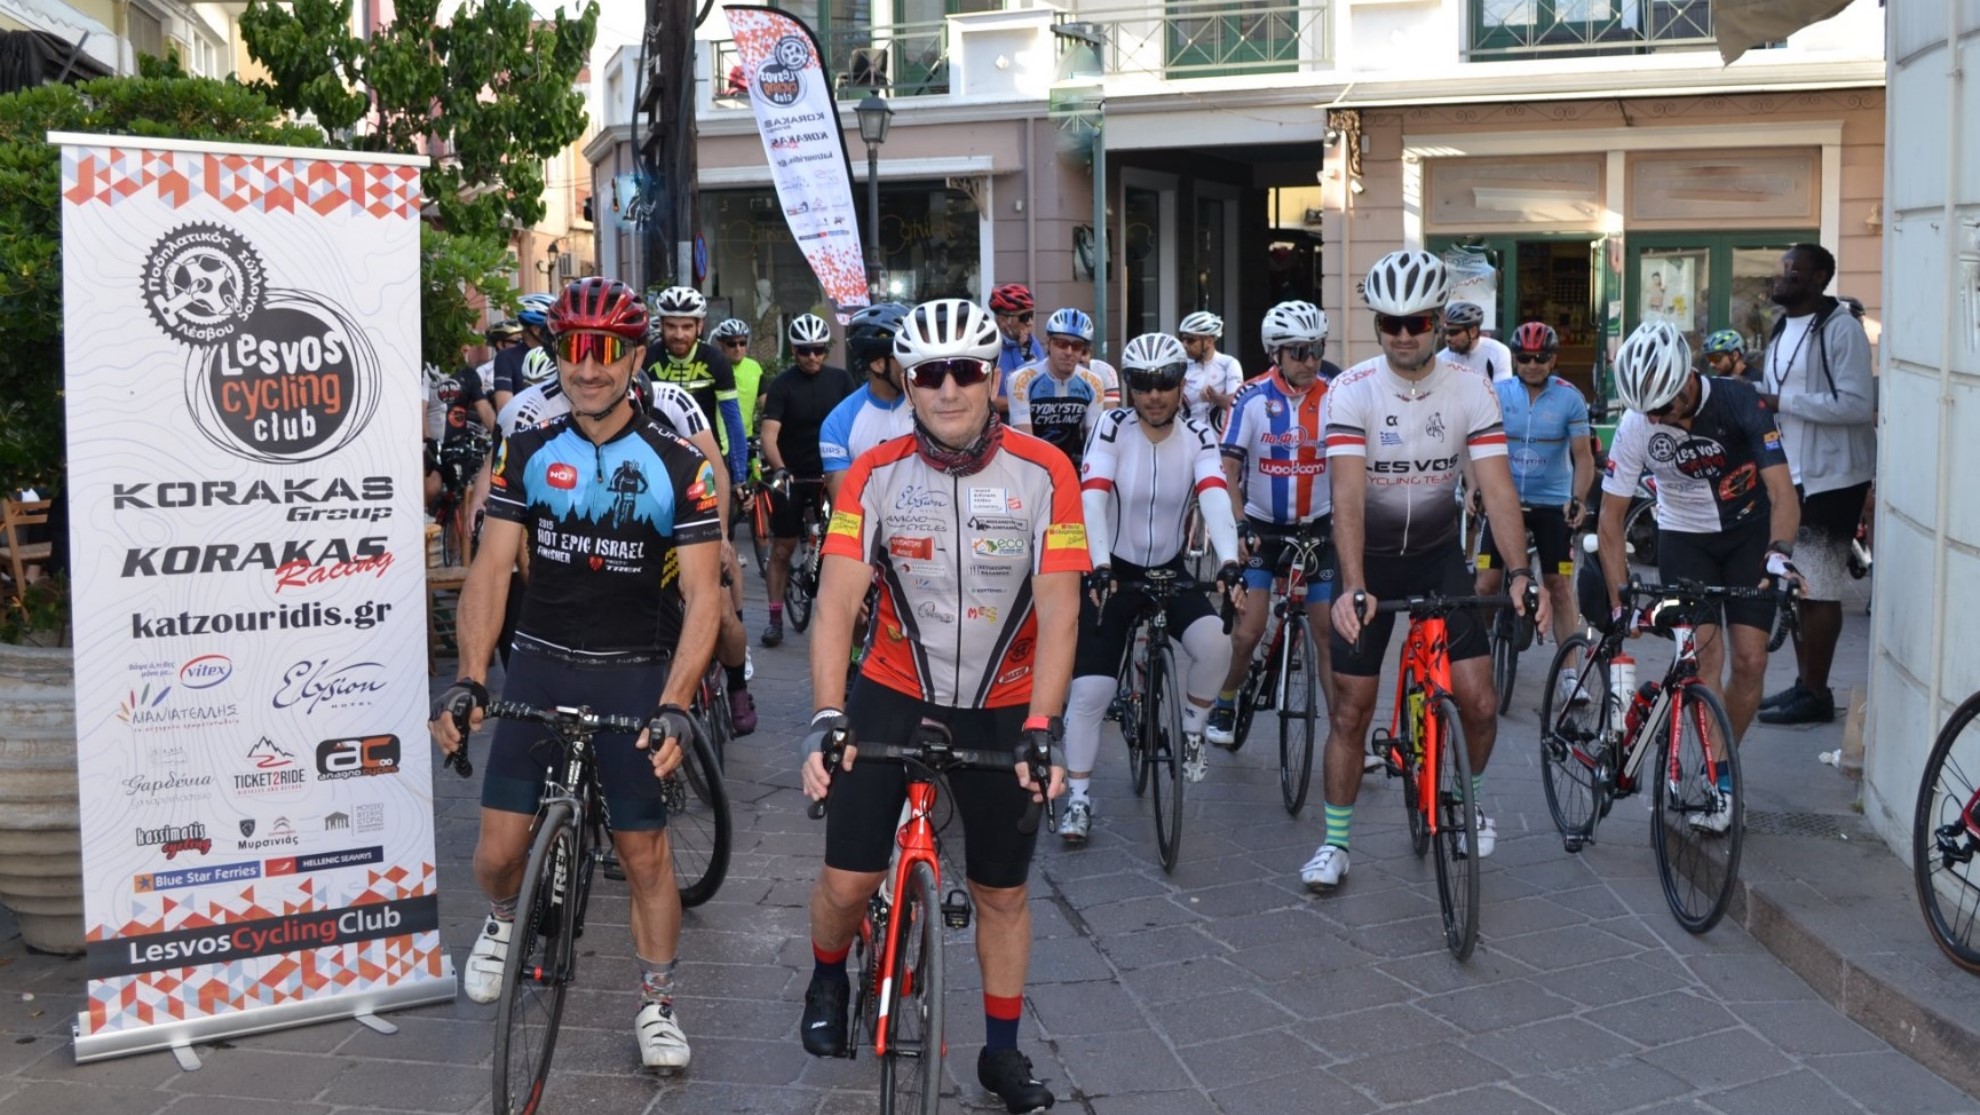 Lesvos Cycling Club Events